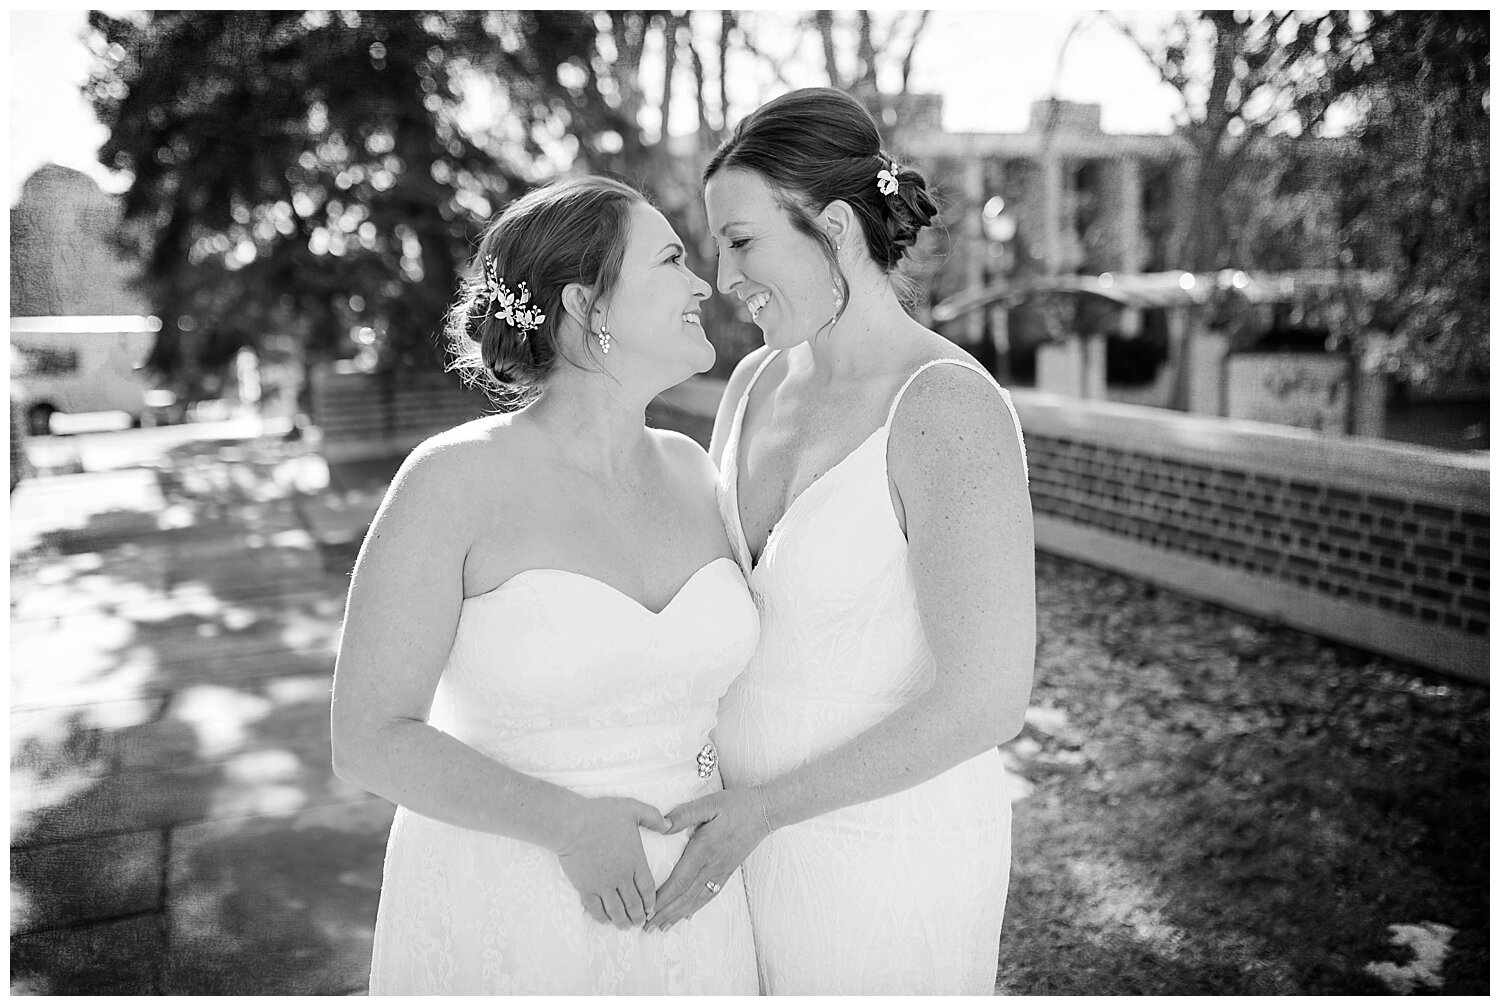 Cindy and Leah's Denver University Wedding Day_0095.jpg